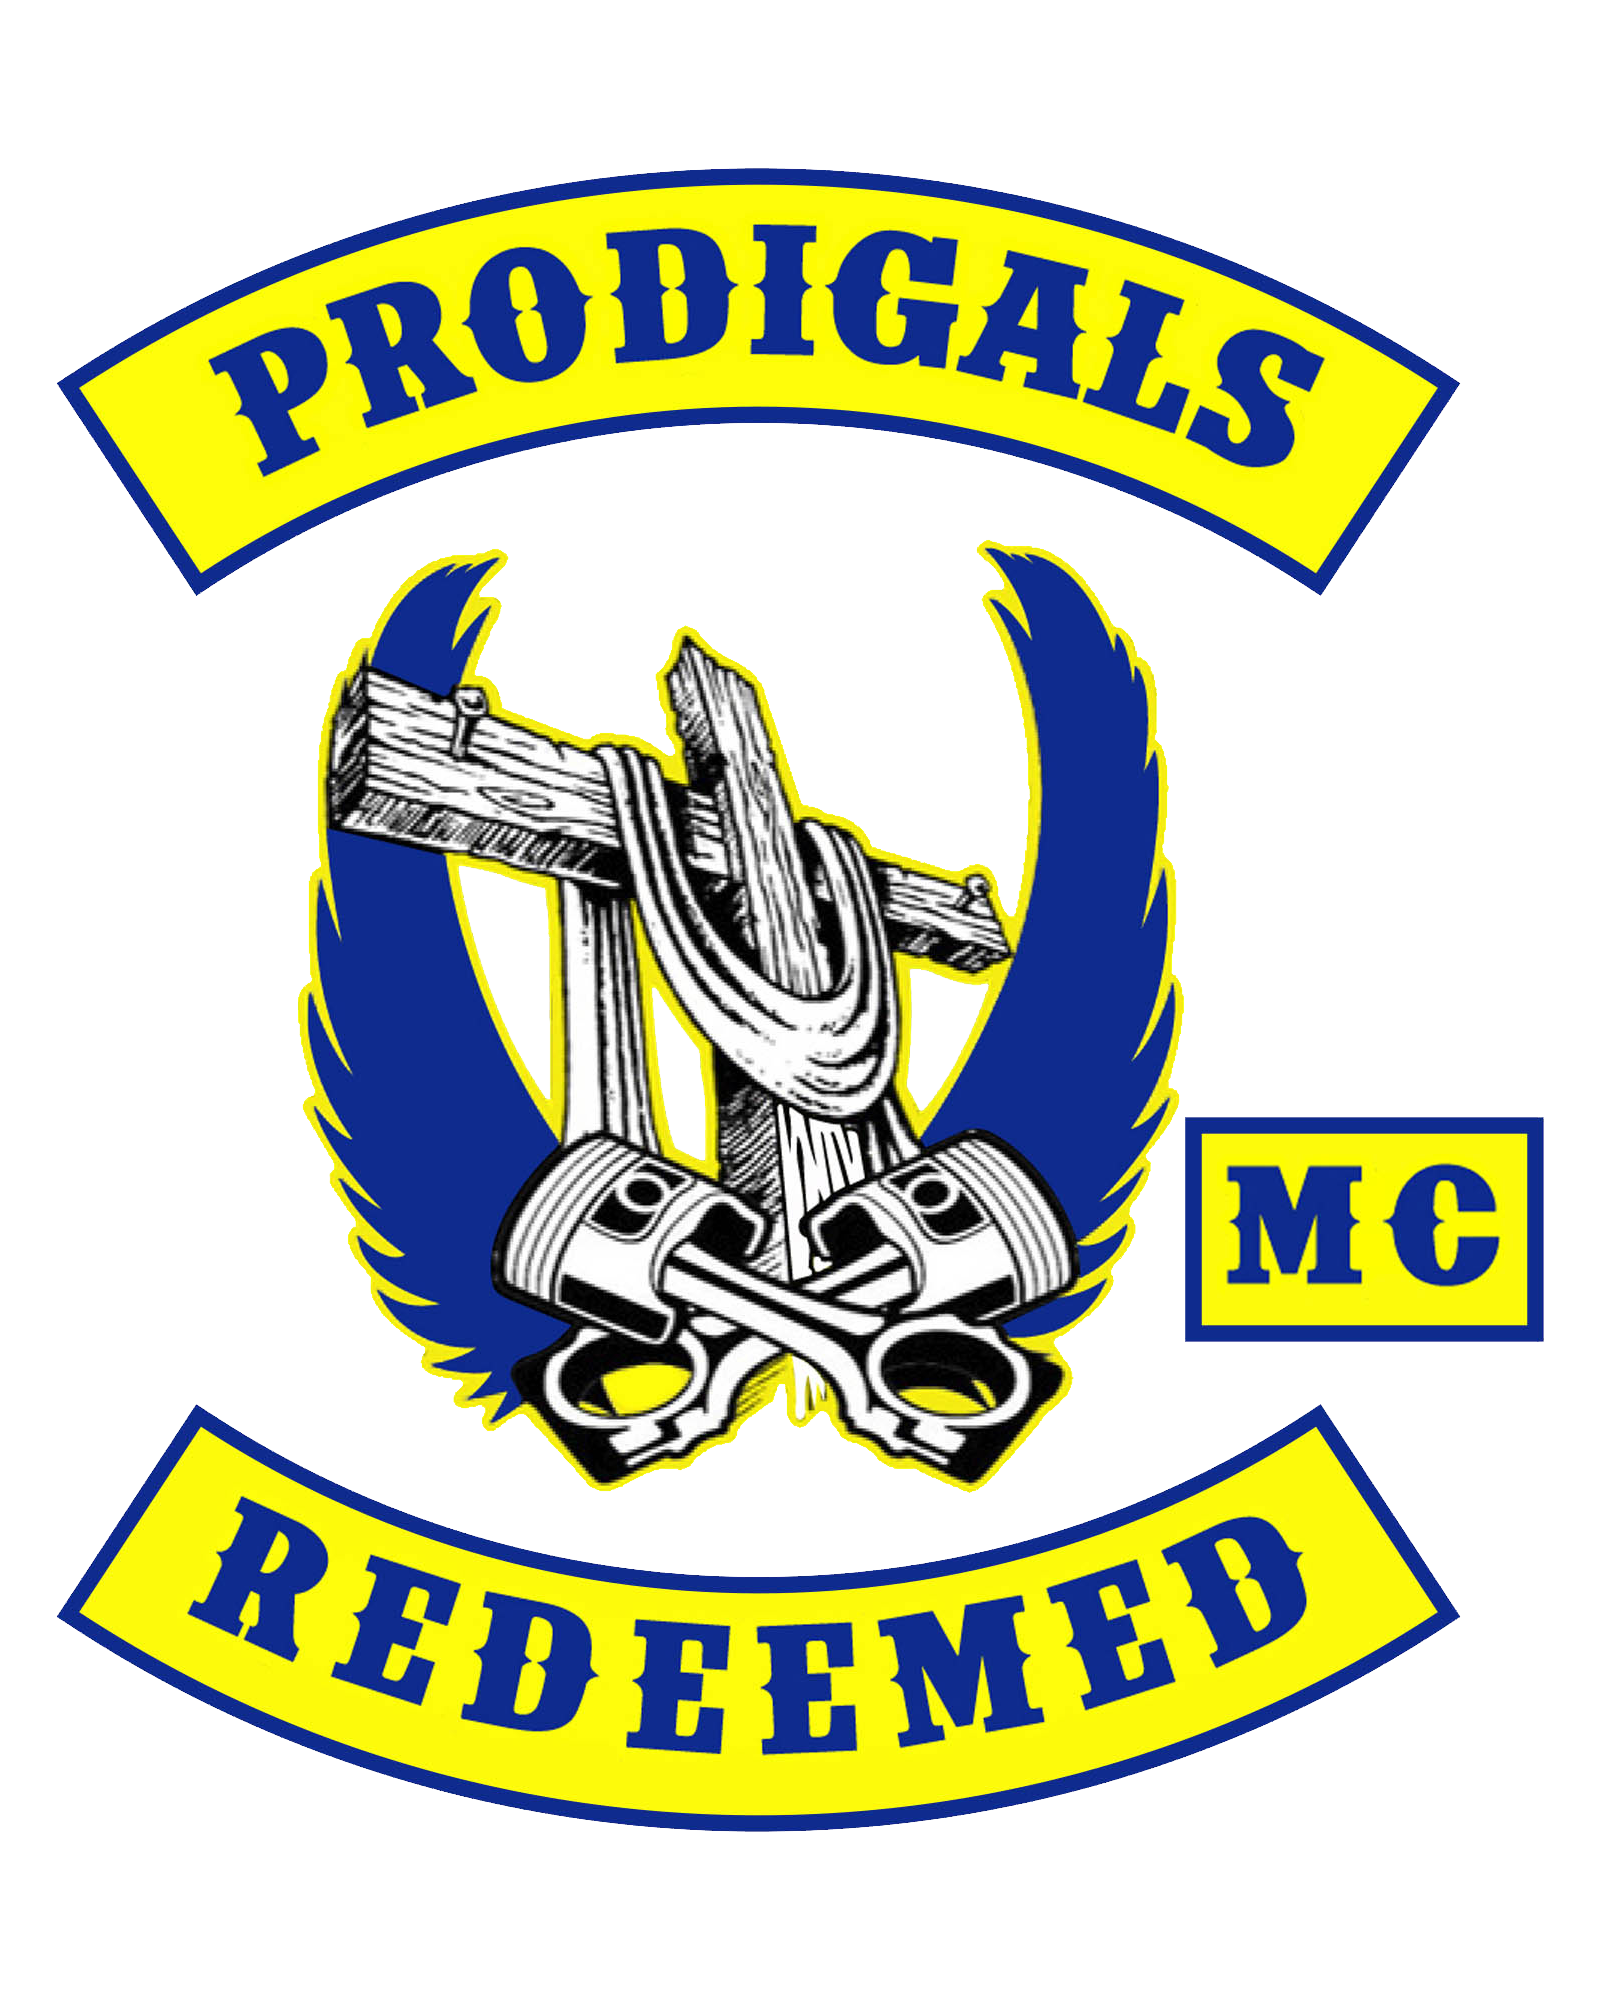 Prodigals MC - Christian MC